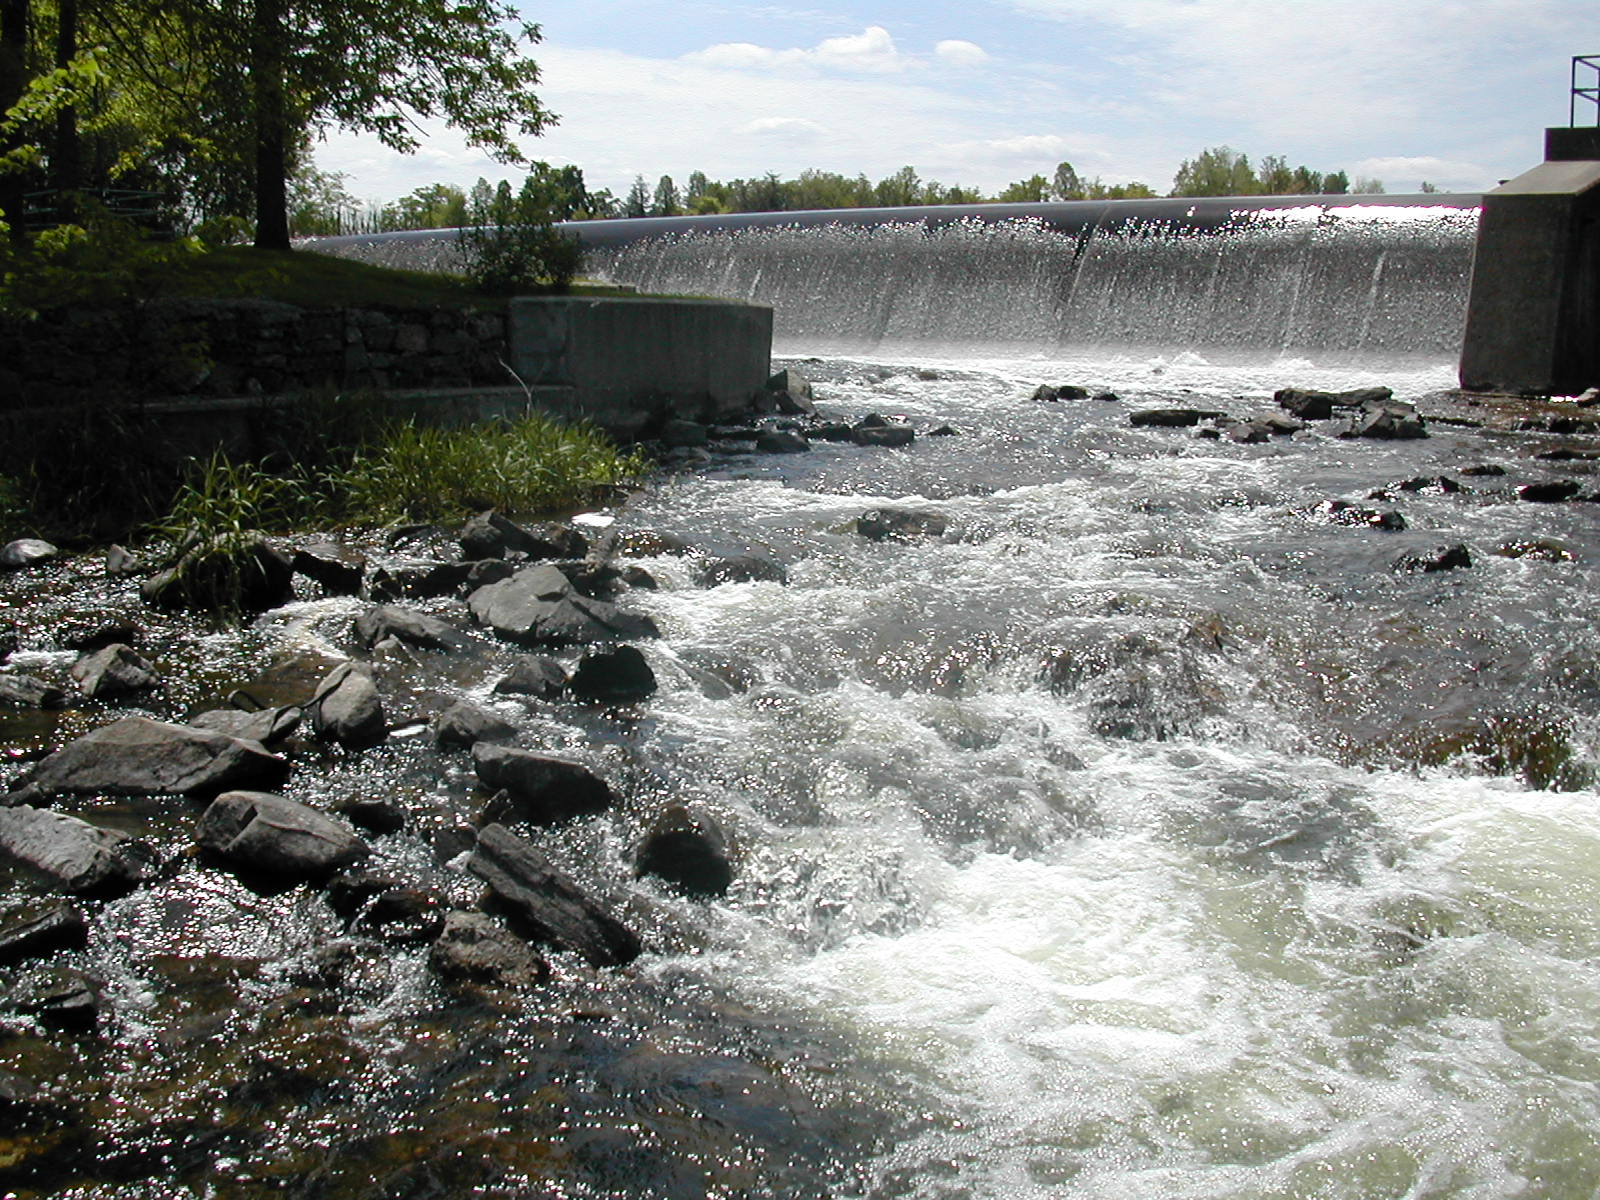 Clayton Dam